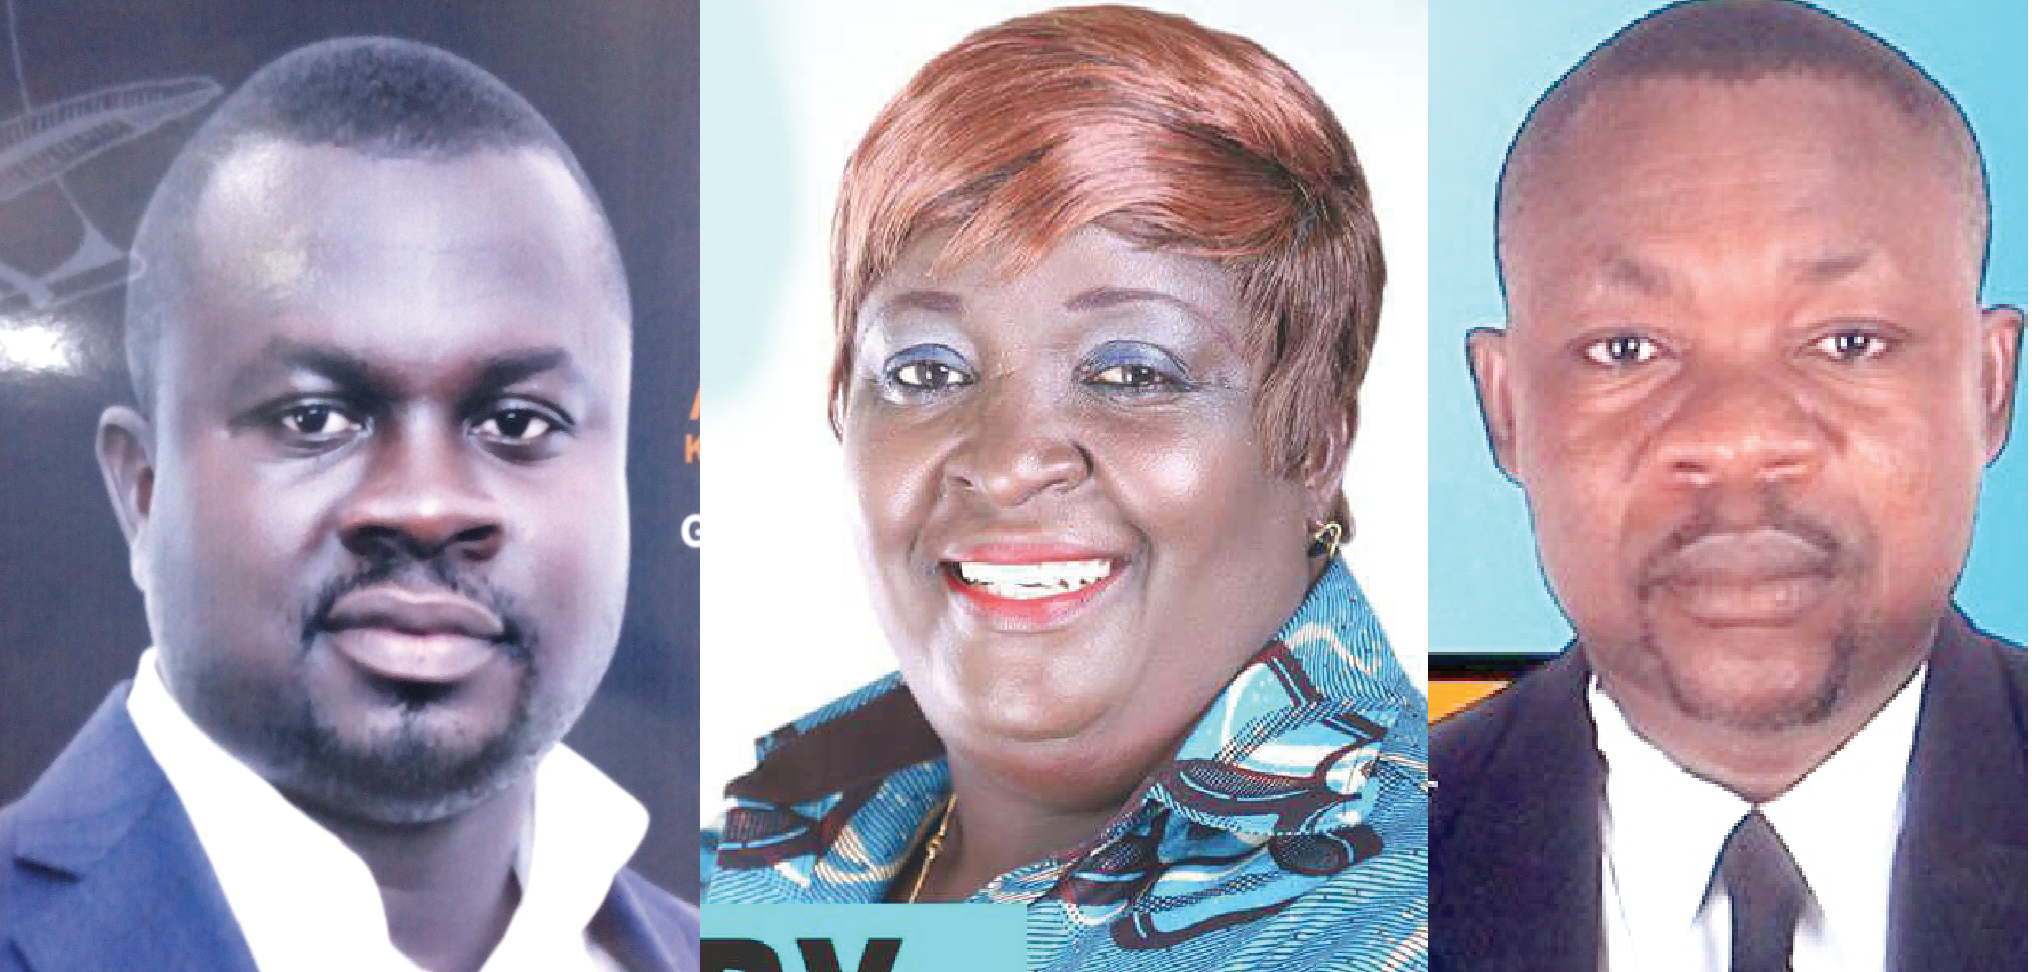 Mr Albert  K. Dwumfour — Aspiring Org. Secretary, Ms Mary Mensah and Nii Adjei Klu — Aspiring Public Affairs Officers